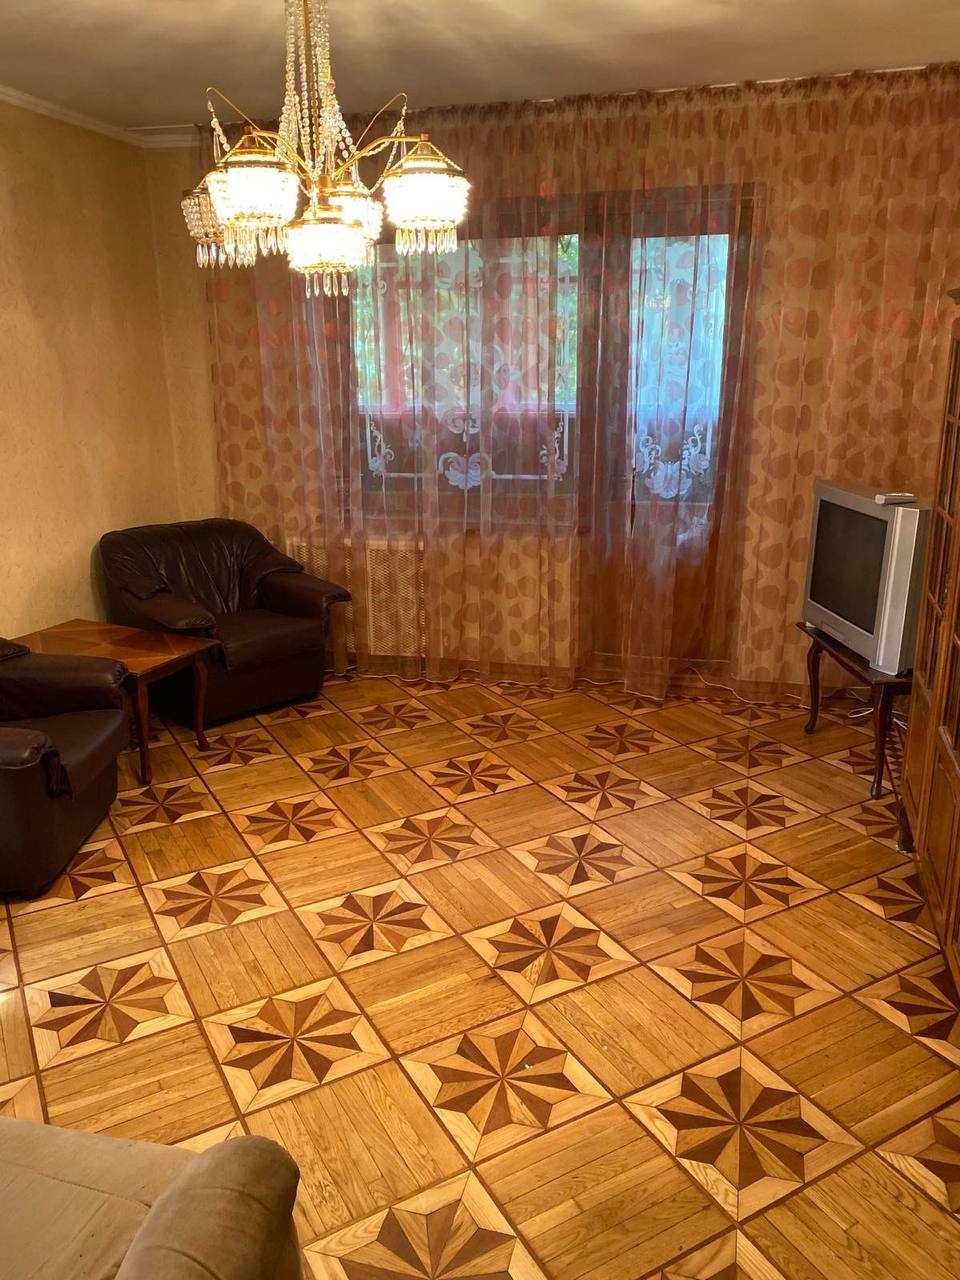 Поселок. Бочарова 36. Цена снижена. 2 комнатная квартира с ремонтом.